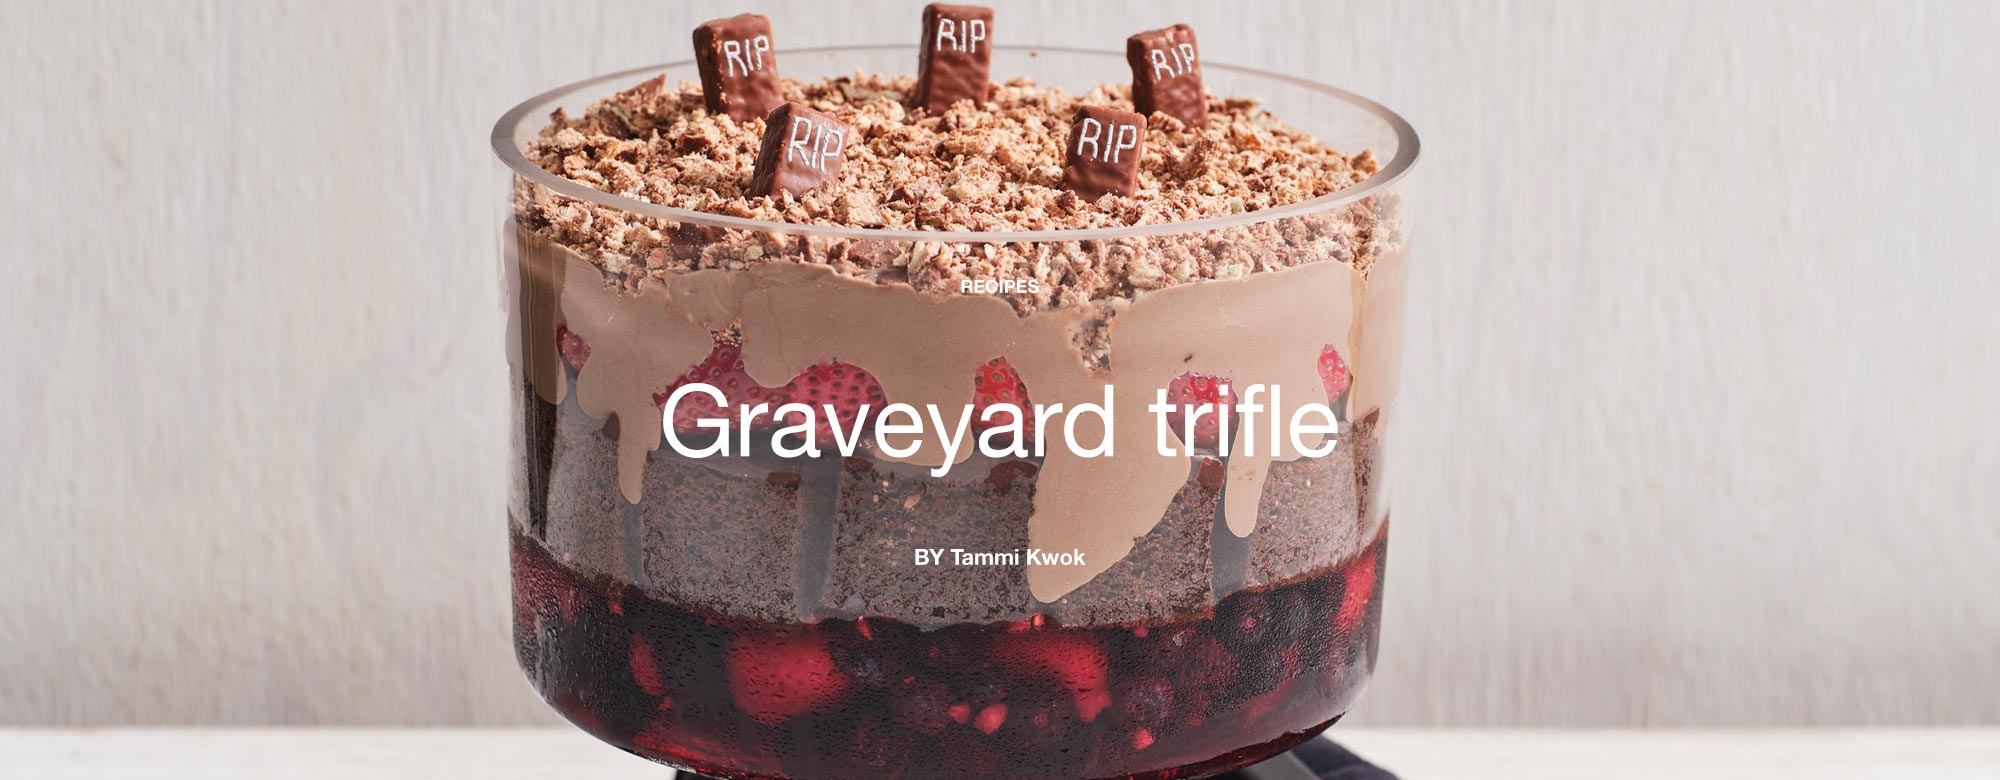 Graveyard trifle